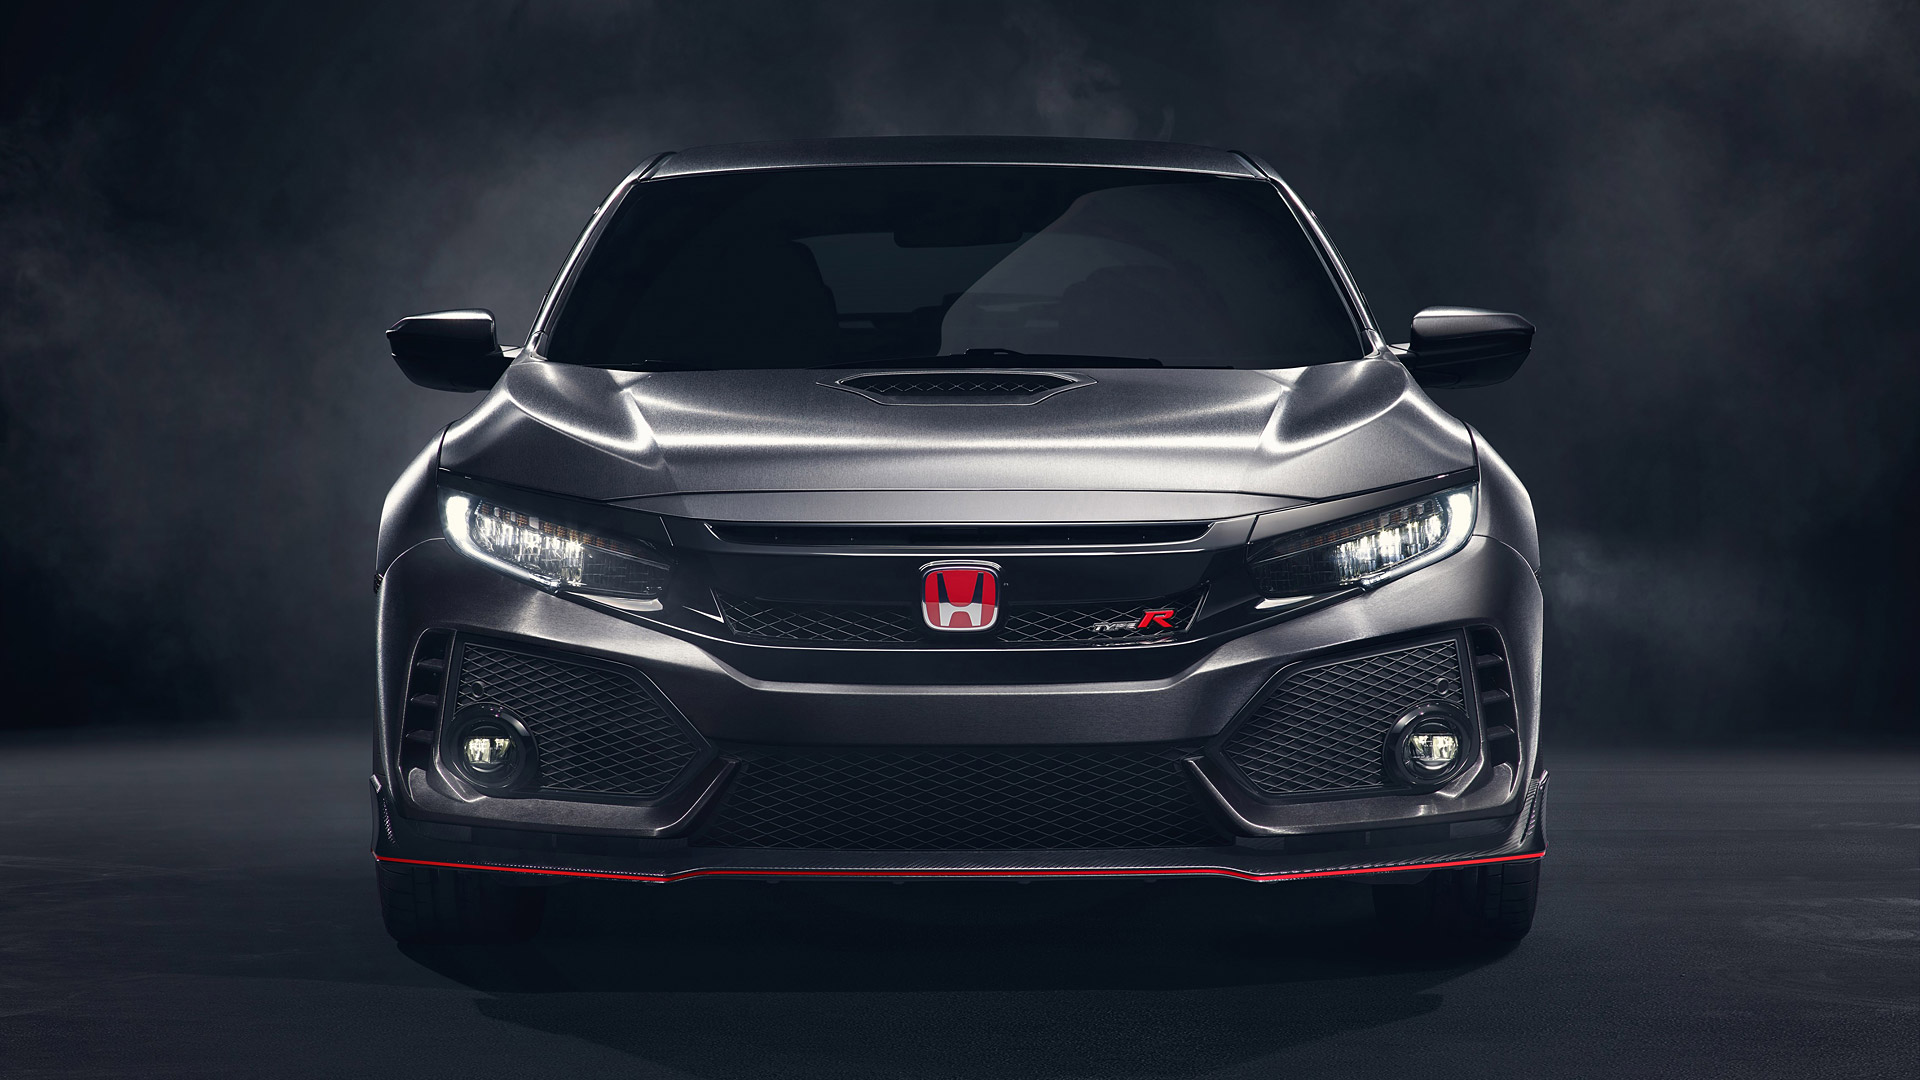  2016 Honda Civic Type R Concept Wallpaper.